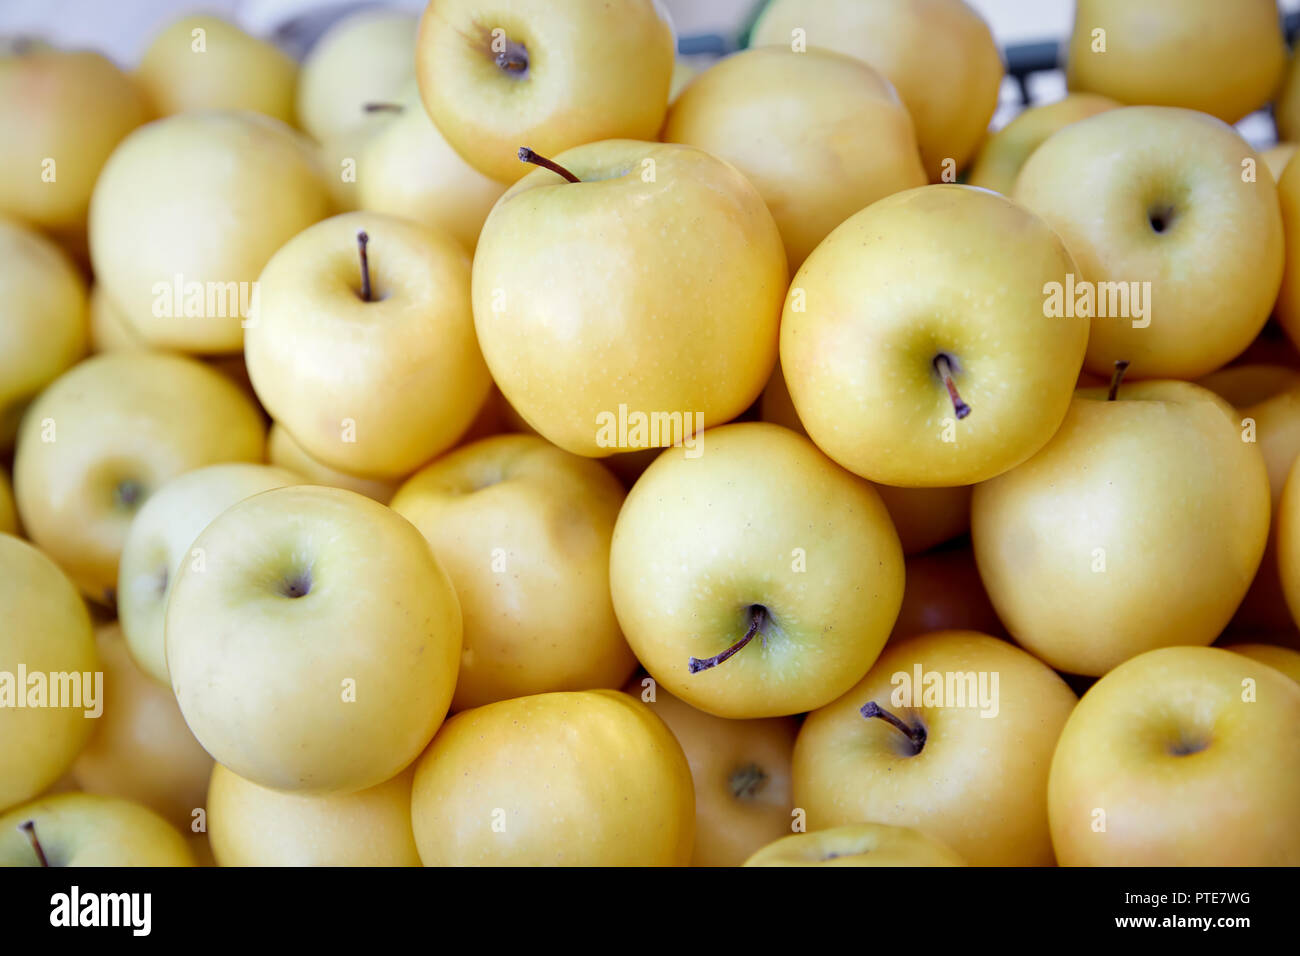 Pile of yellow apples on the market in Almaty, Kazakhstan Stock Photo -  Alamy